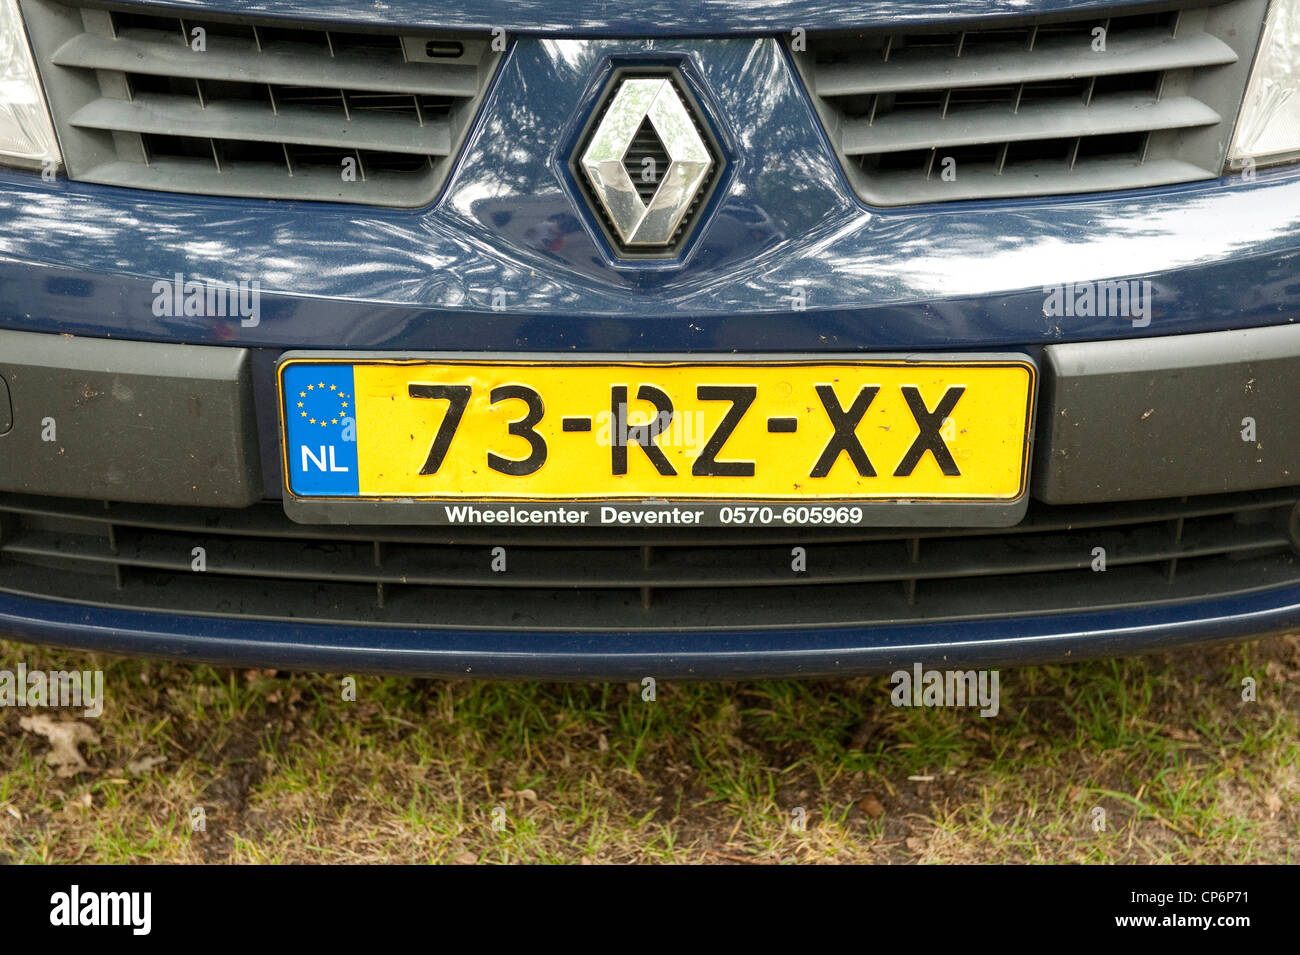 Dutch NL Car Licence Registration Plate Number Netherlands Holland Europe  EU Stock Photo - Alamy